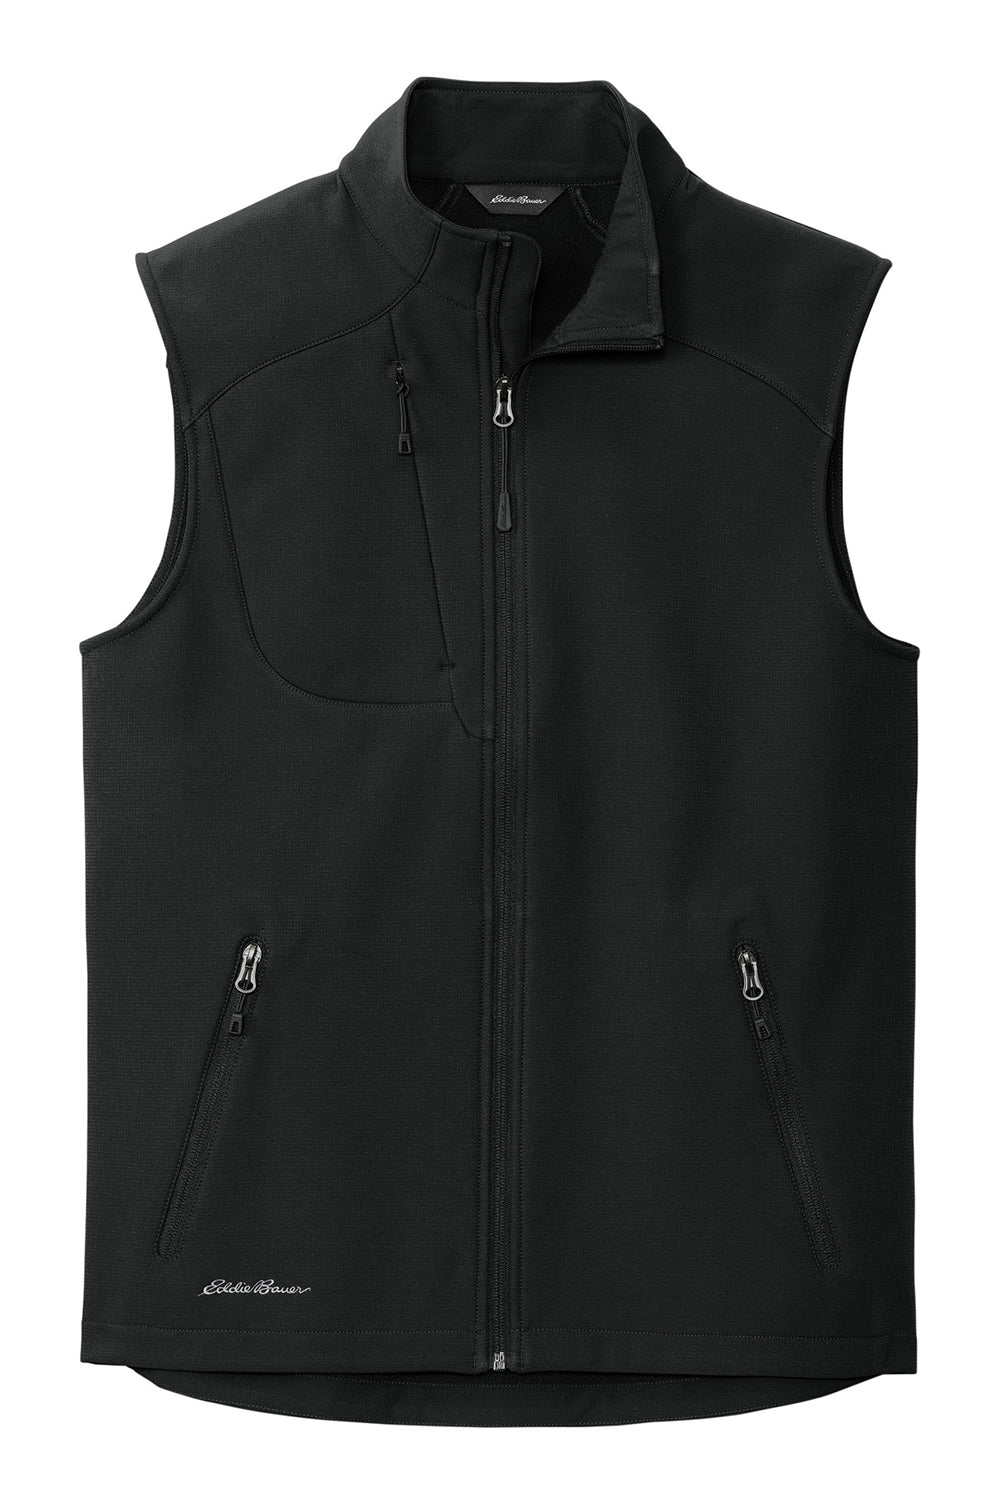 Eddie Bauer EB546 Mens Stretch Soft Shell Full Zip Vest Deep Black Flat Front